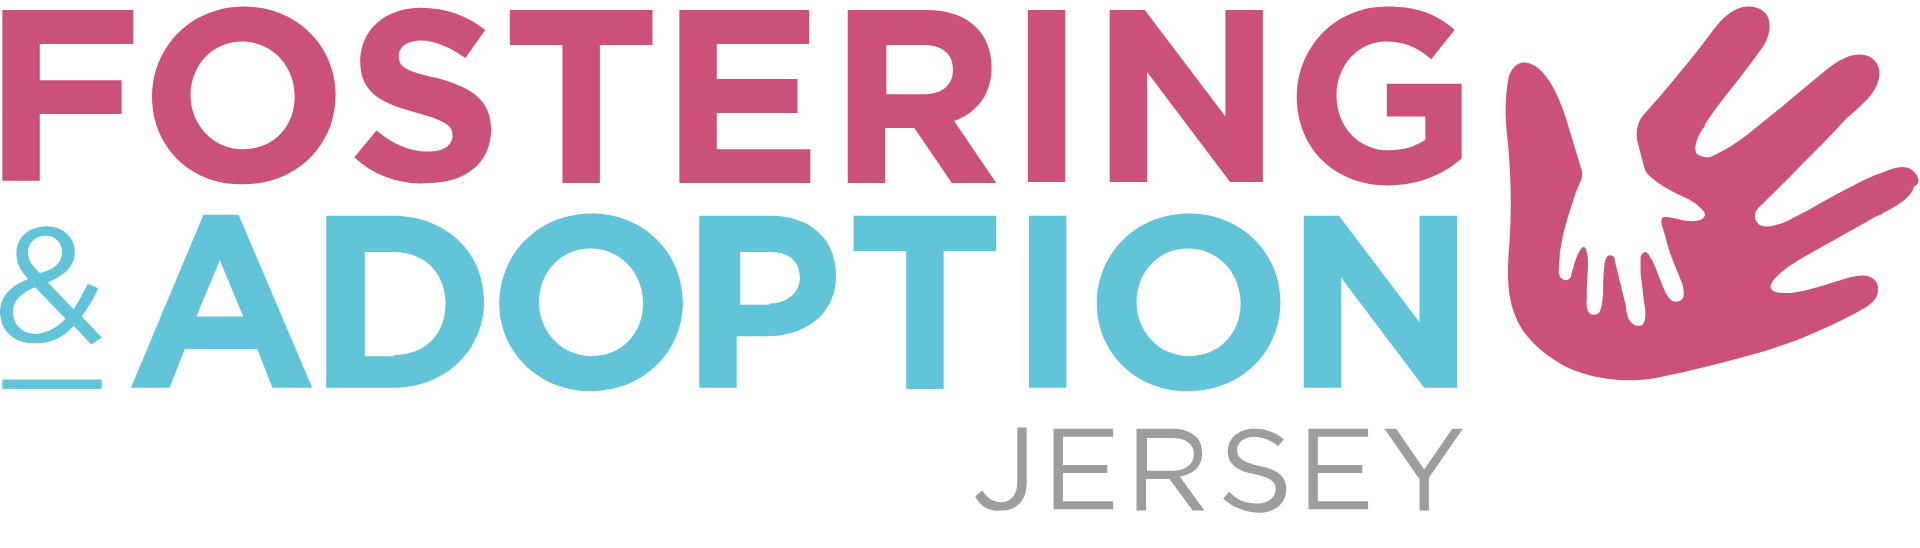 Fostering & Adoption Jersey